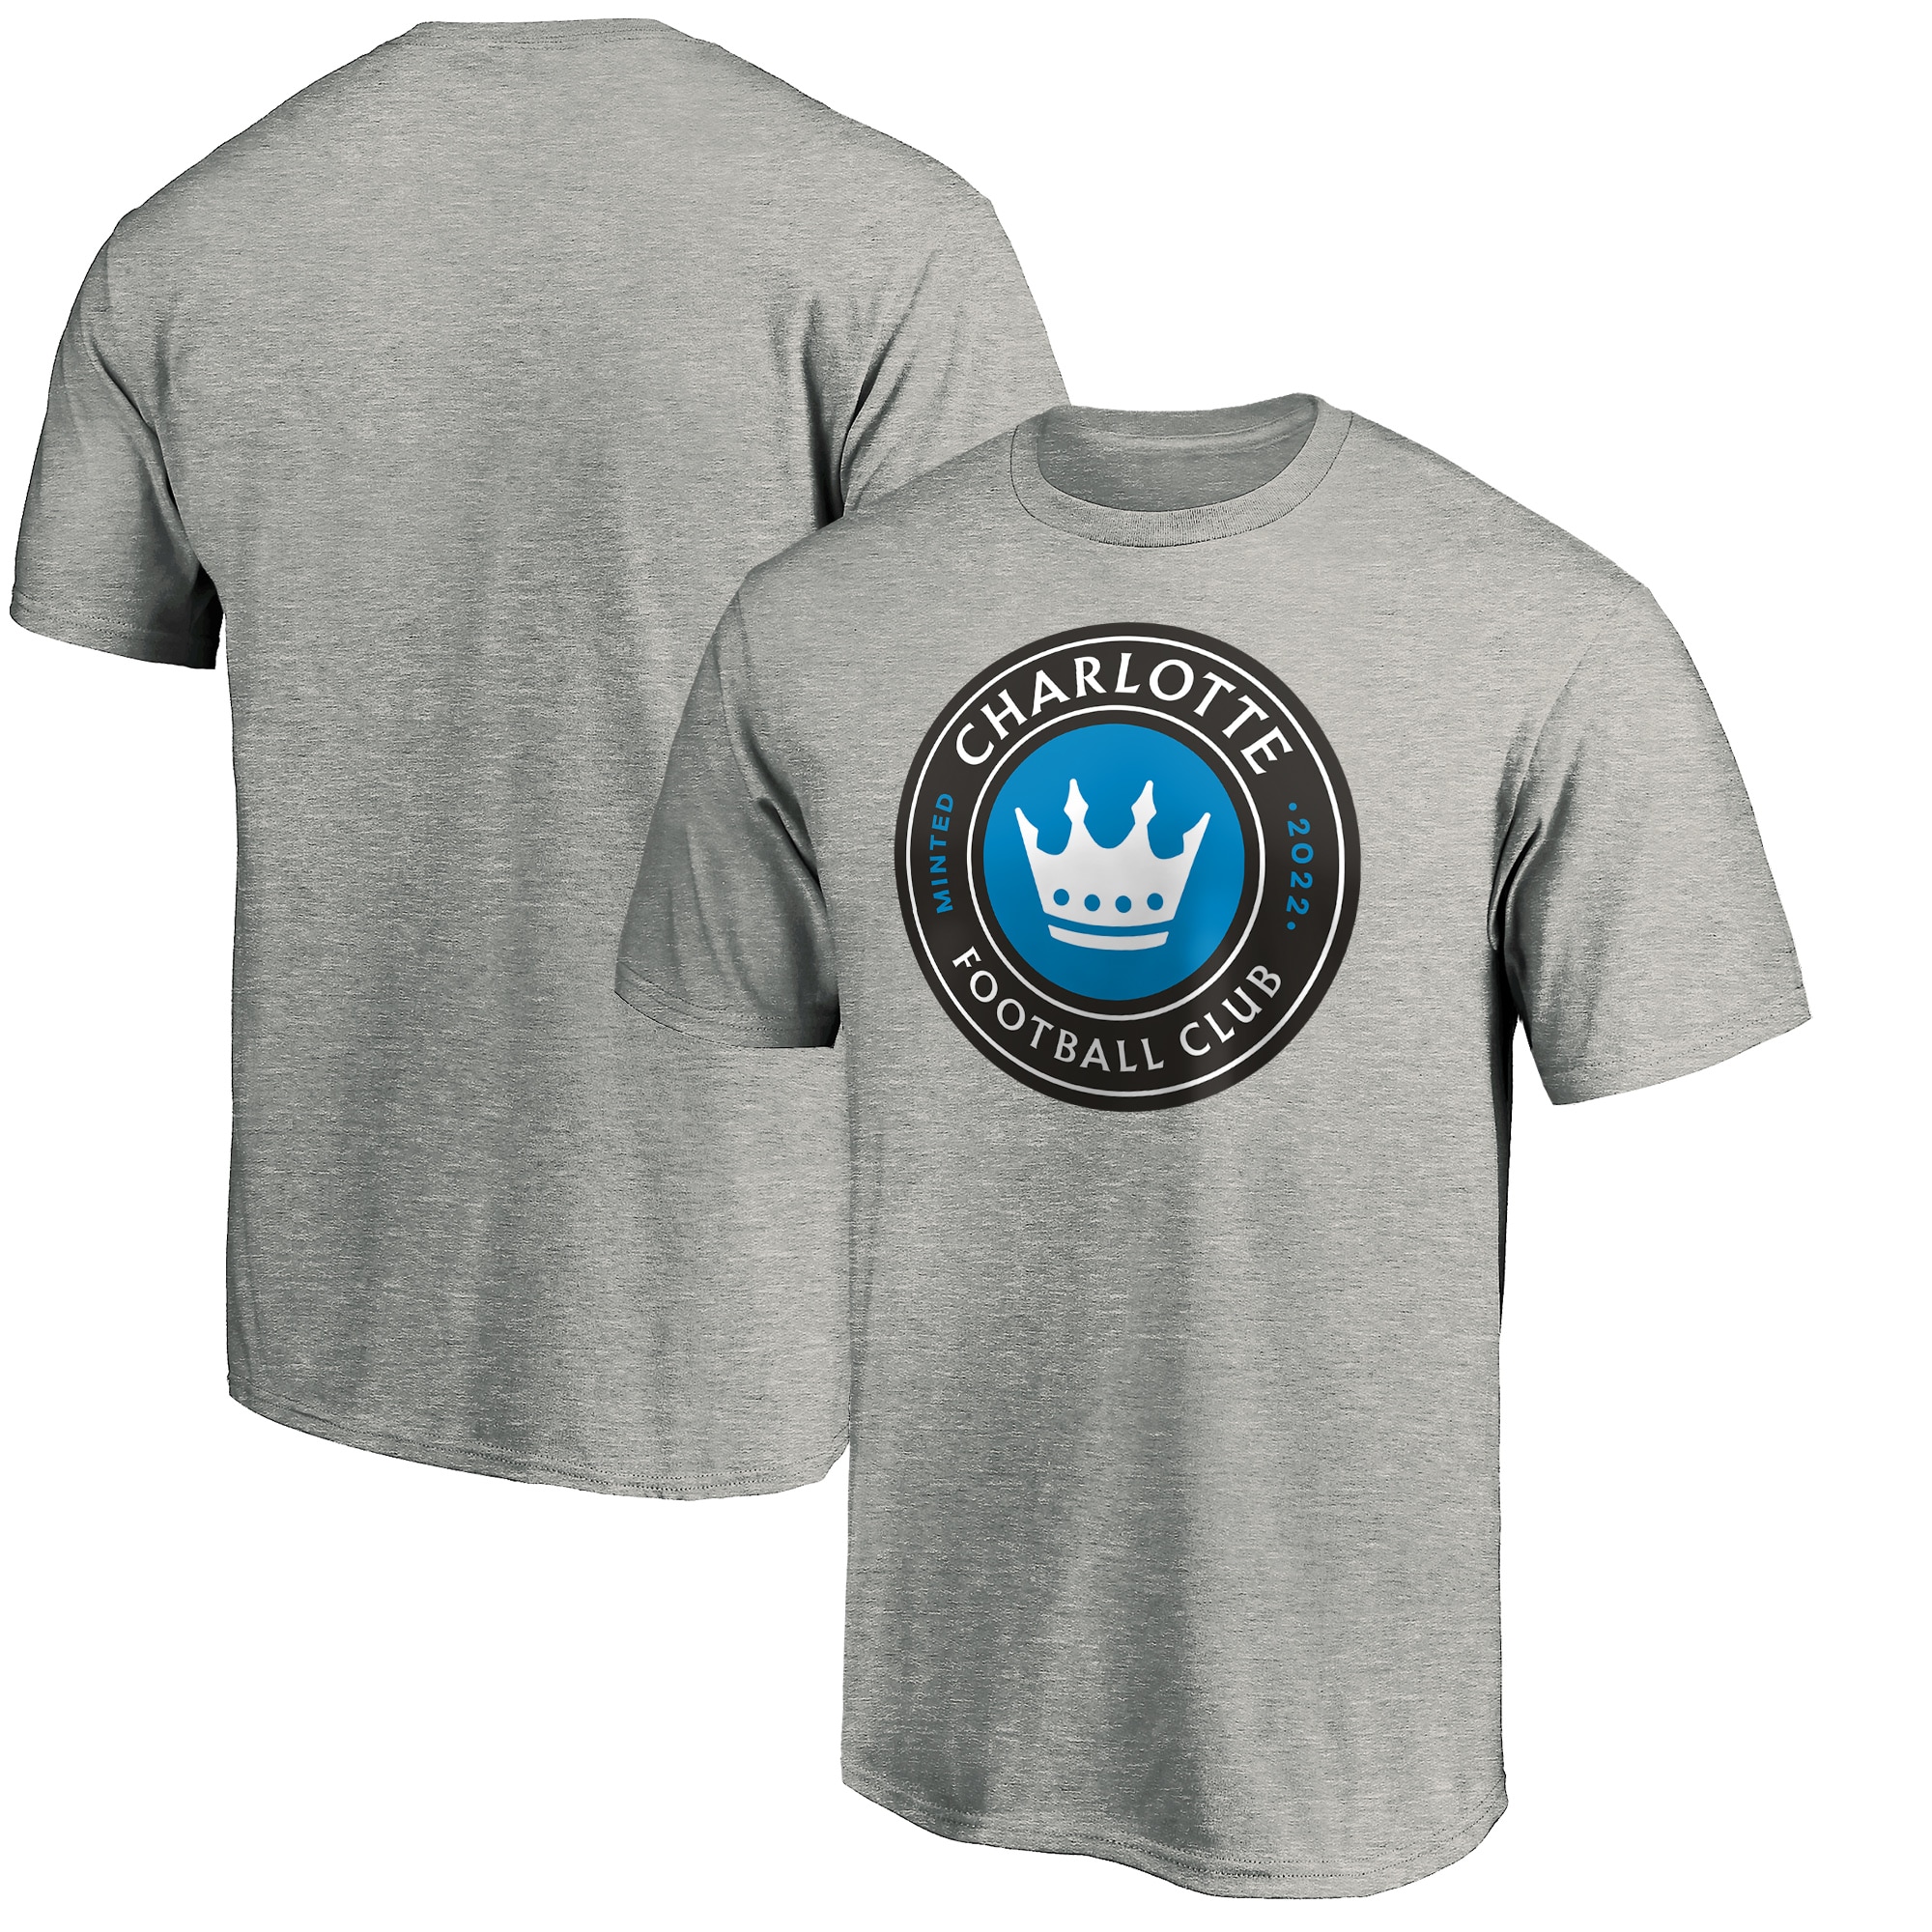 Men's Fanatics Branded Heathered Gray Charlotte FC Primary Logo Team T-Shirt - image 1 of 3